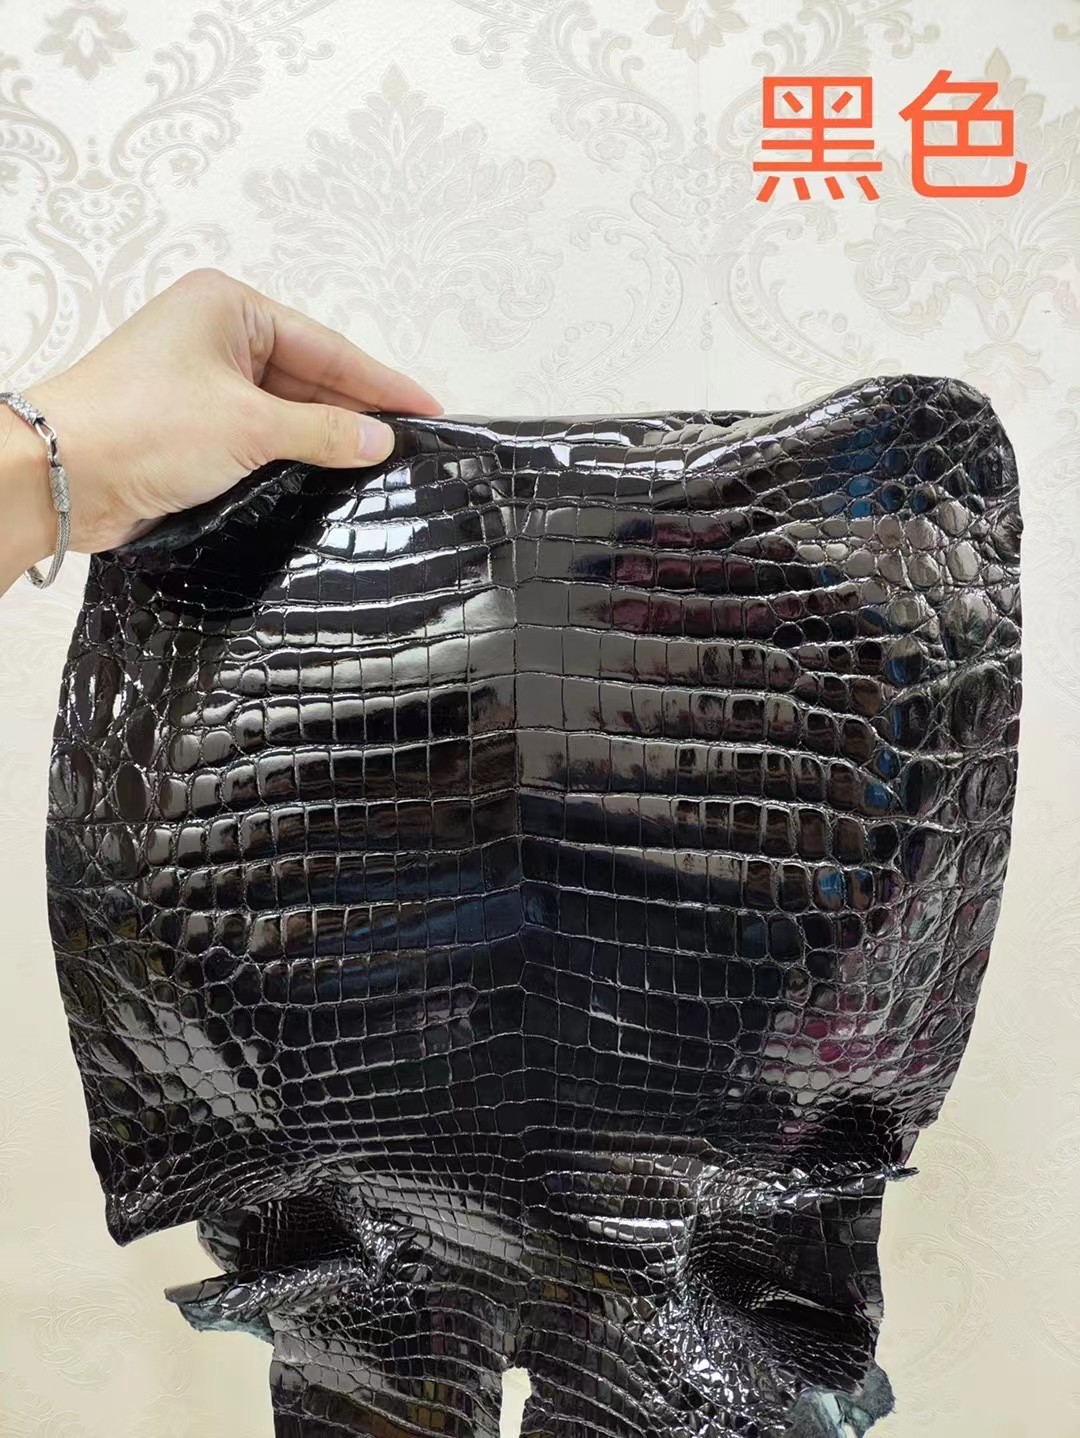 Shebag New comming Hermes bag leathers（2023 Week 51）-בעסטער קוואַליטעט שווינדל לוי ווויטטאָן באַג אָנליין קראָם, רעפּליקע דיזיינער זעקל רו